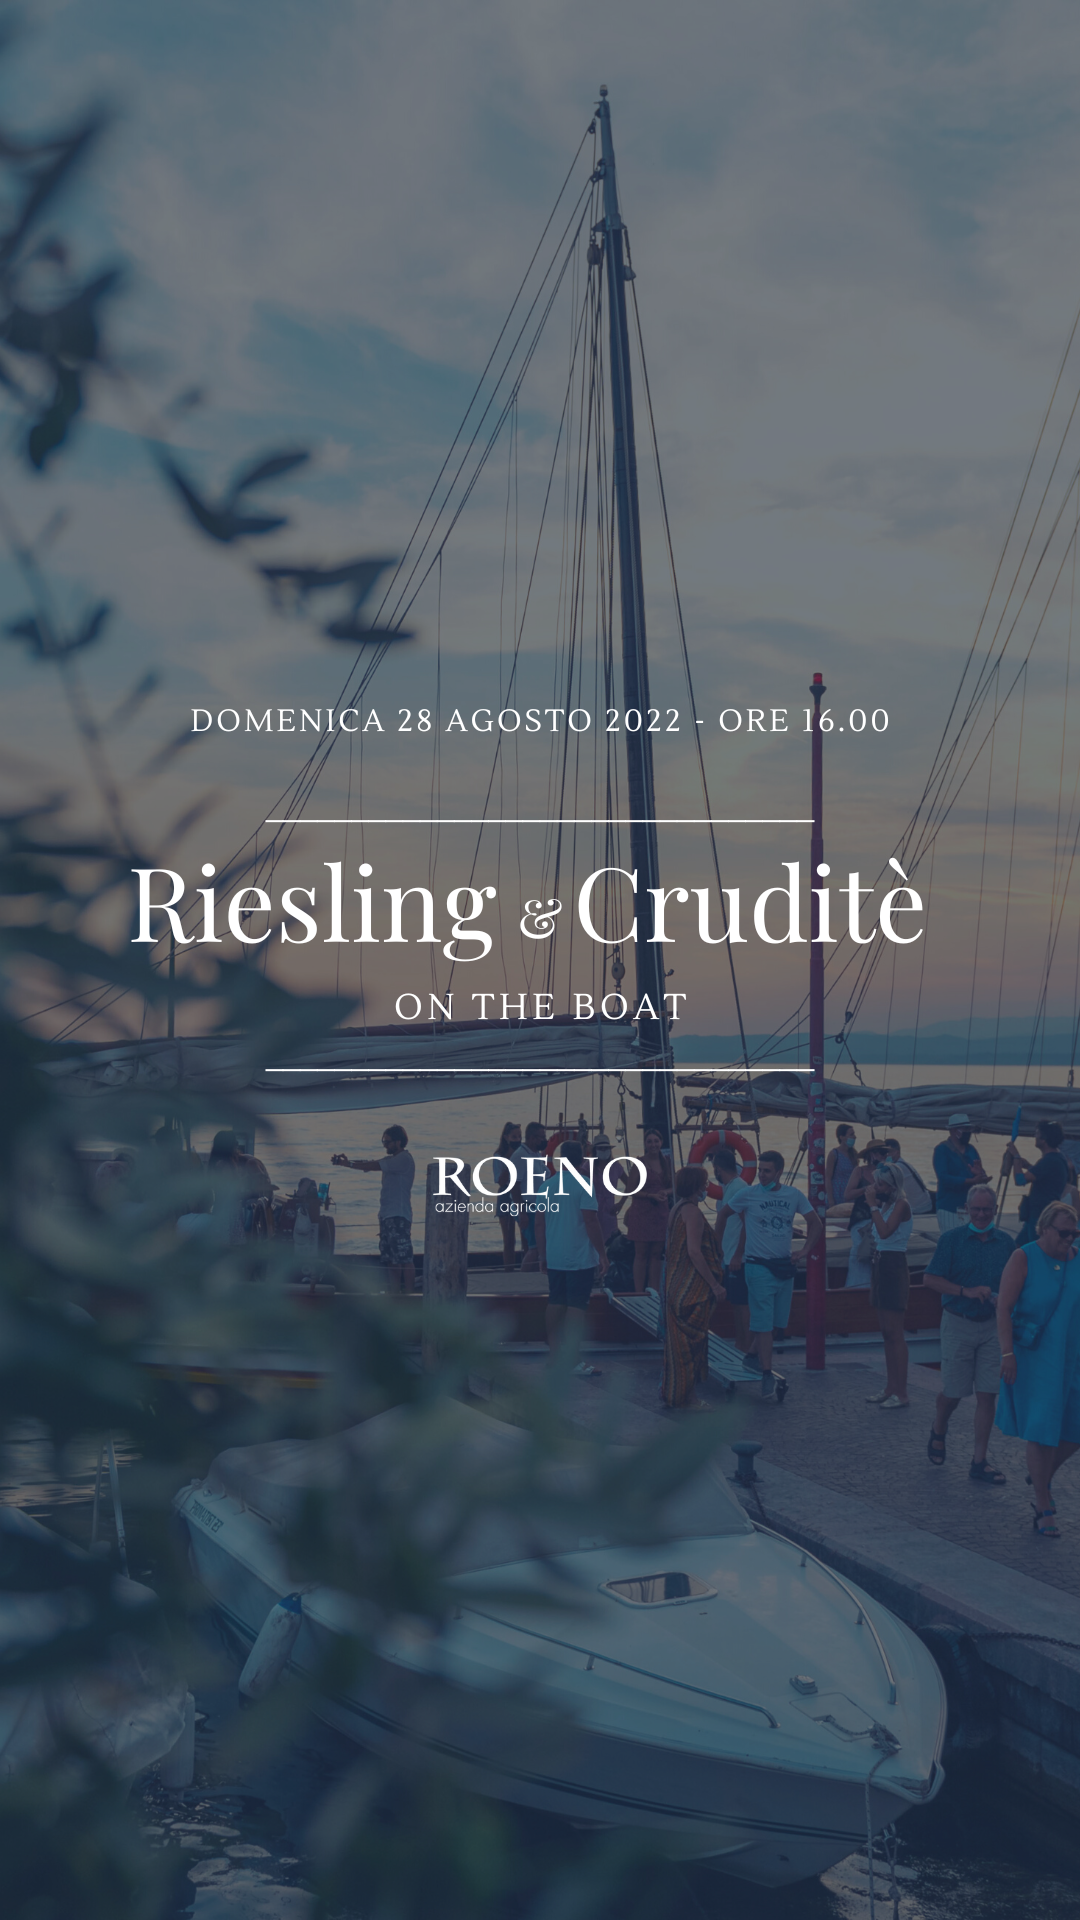 Riesling & Cruditè on the boat